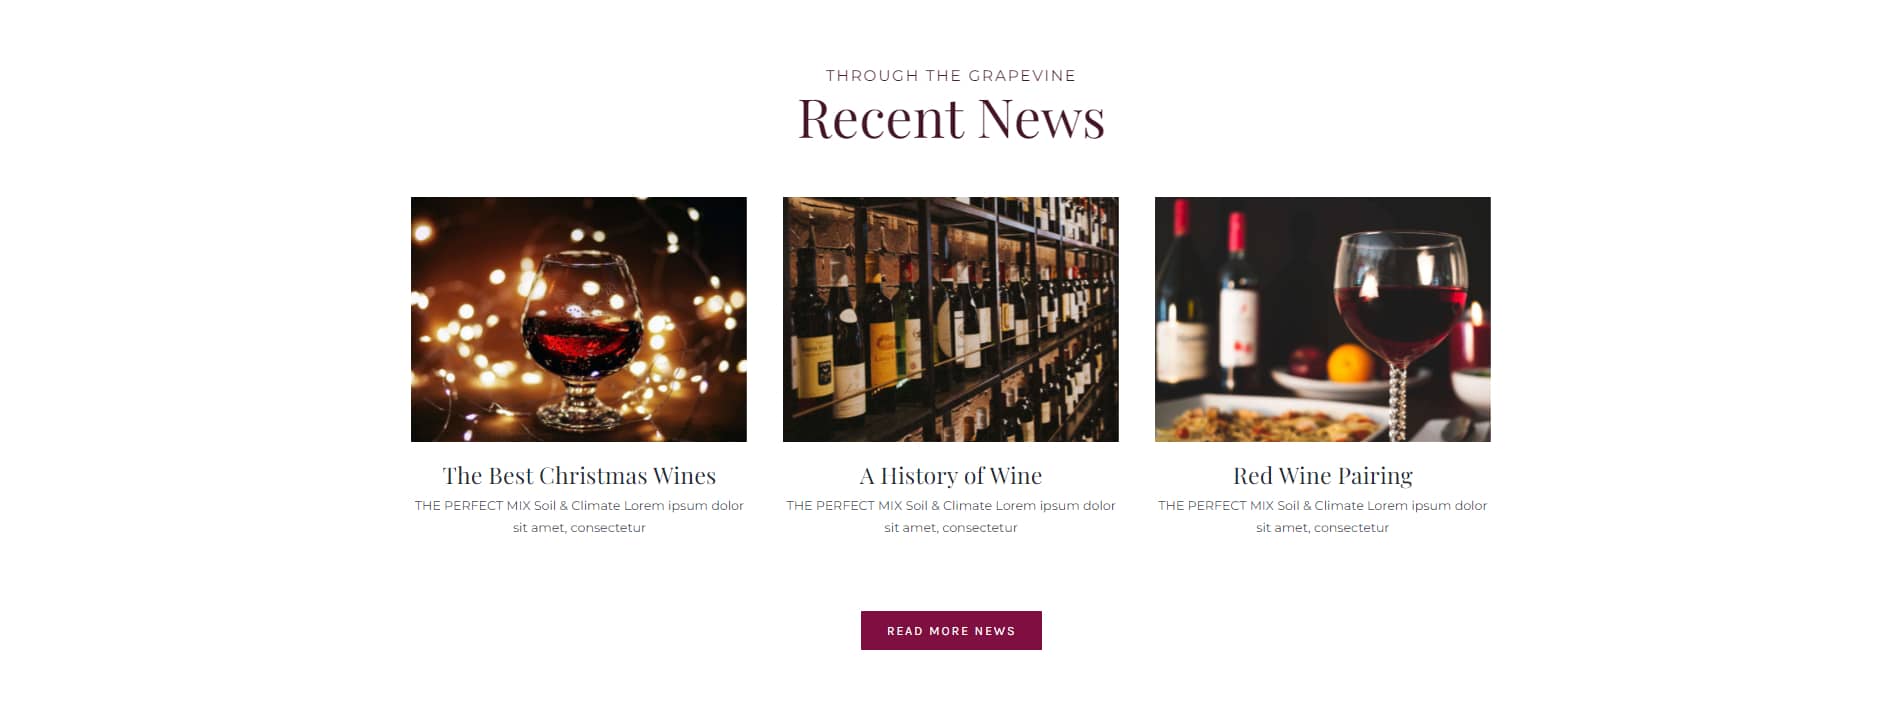 Avada Winery Recent News